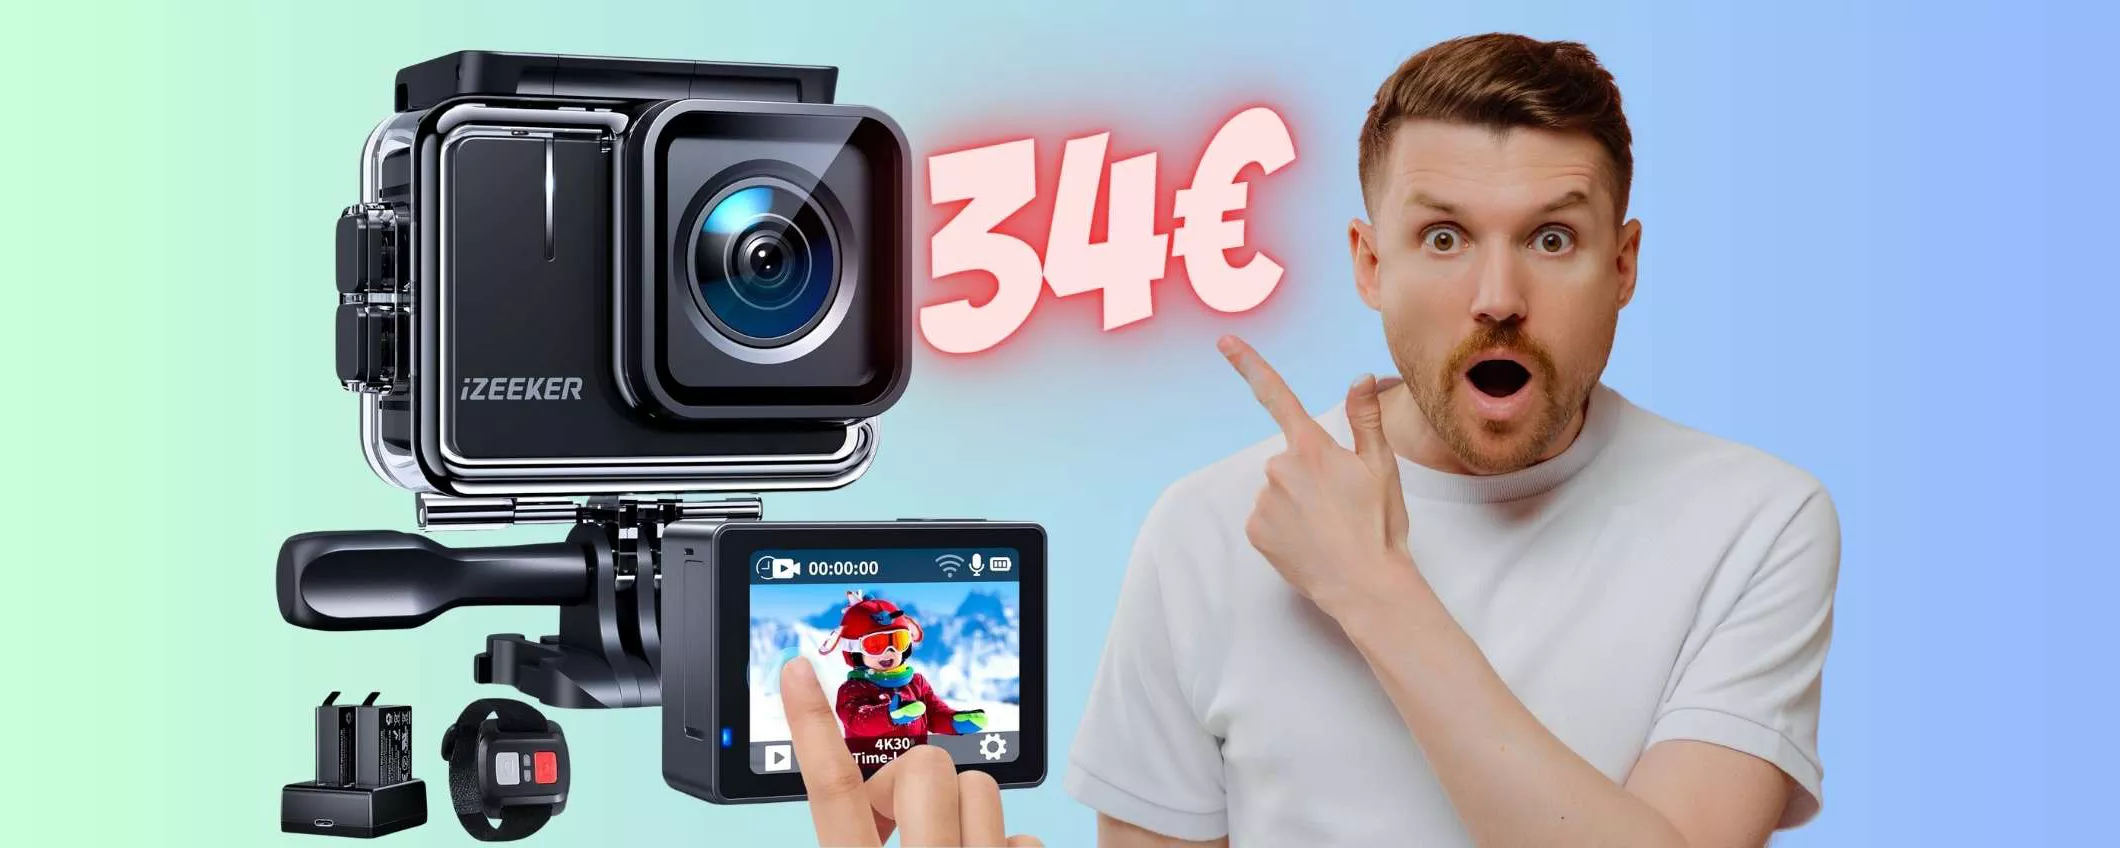 OFFERTA LAMPO per questa Action Cam 4K con display touch (34€)